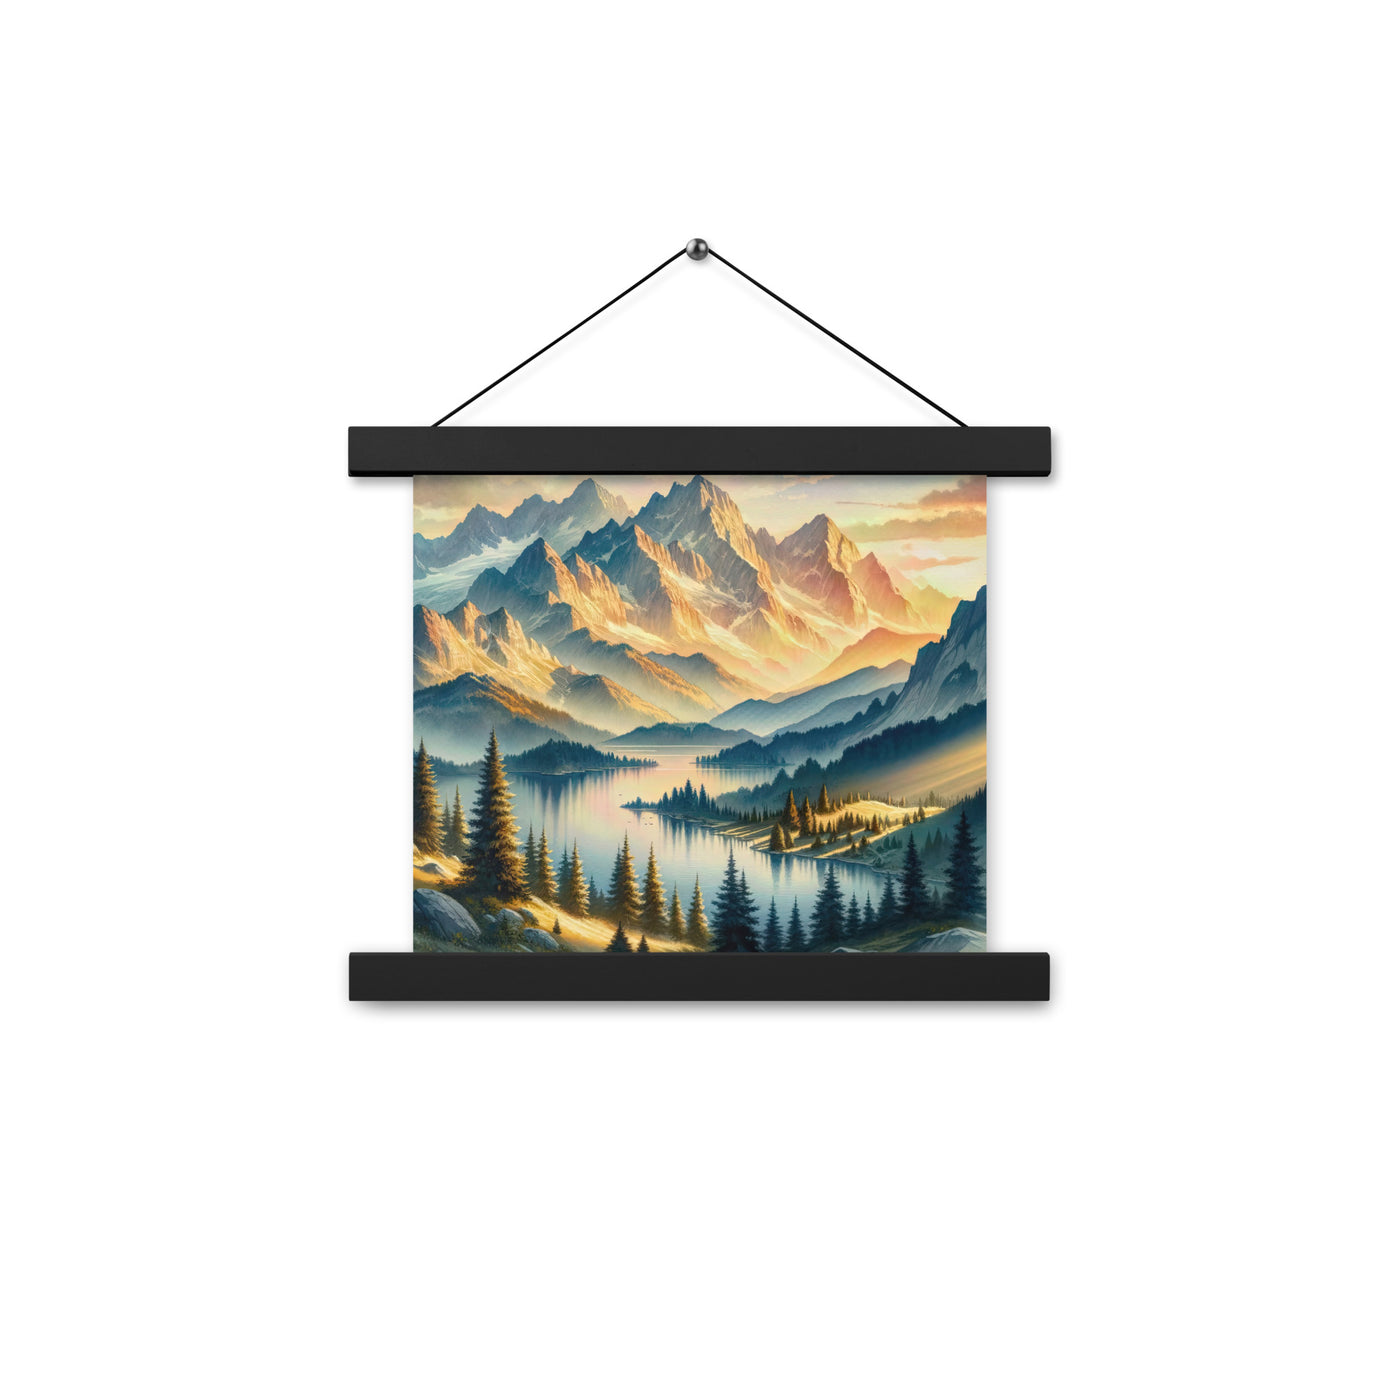 Aquarell der Alpenpracht bei Sonnenuntergang, Berge im goldenen Licht - Premium Poster mit Aufhängung berge xxx yyy zzz 25.4 x 25.4 cm